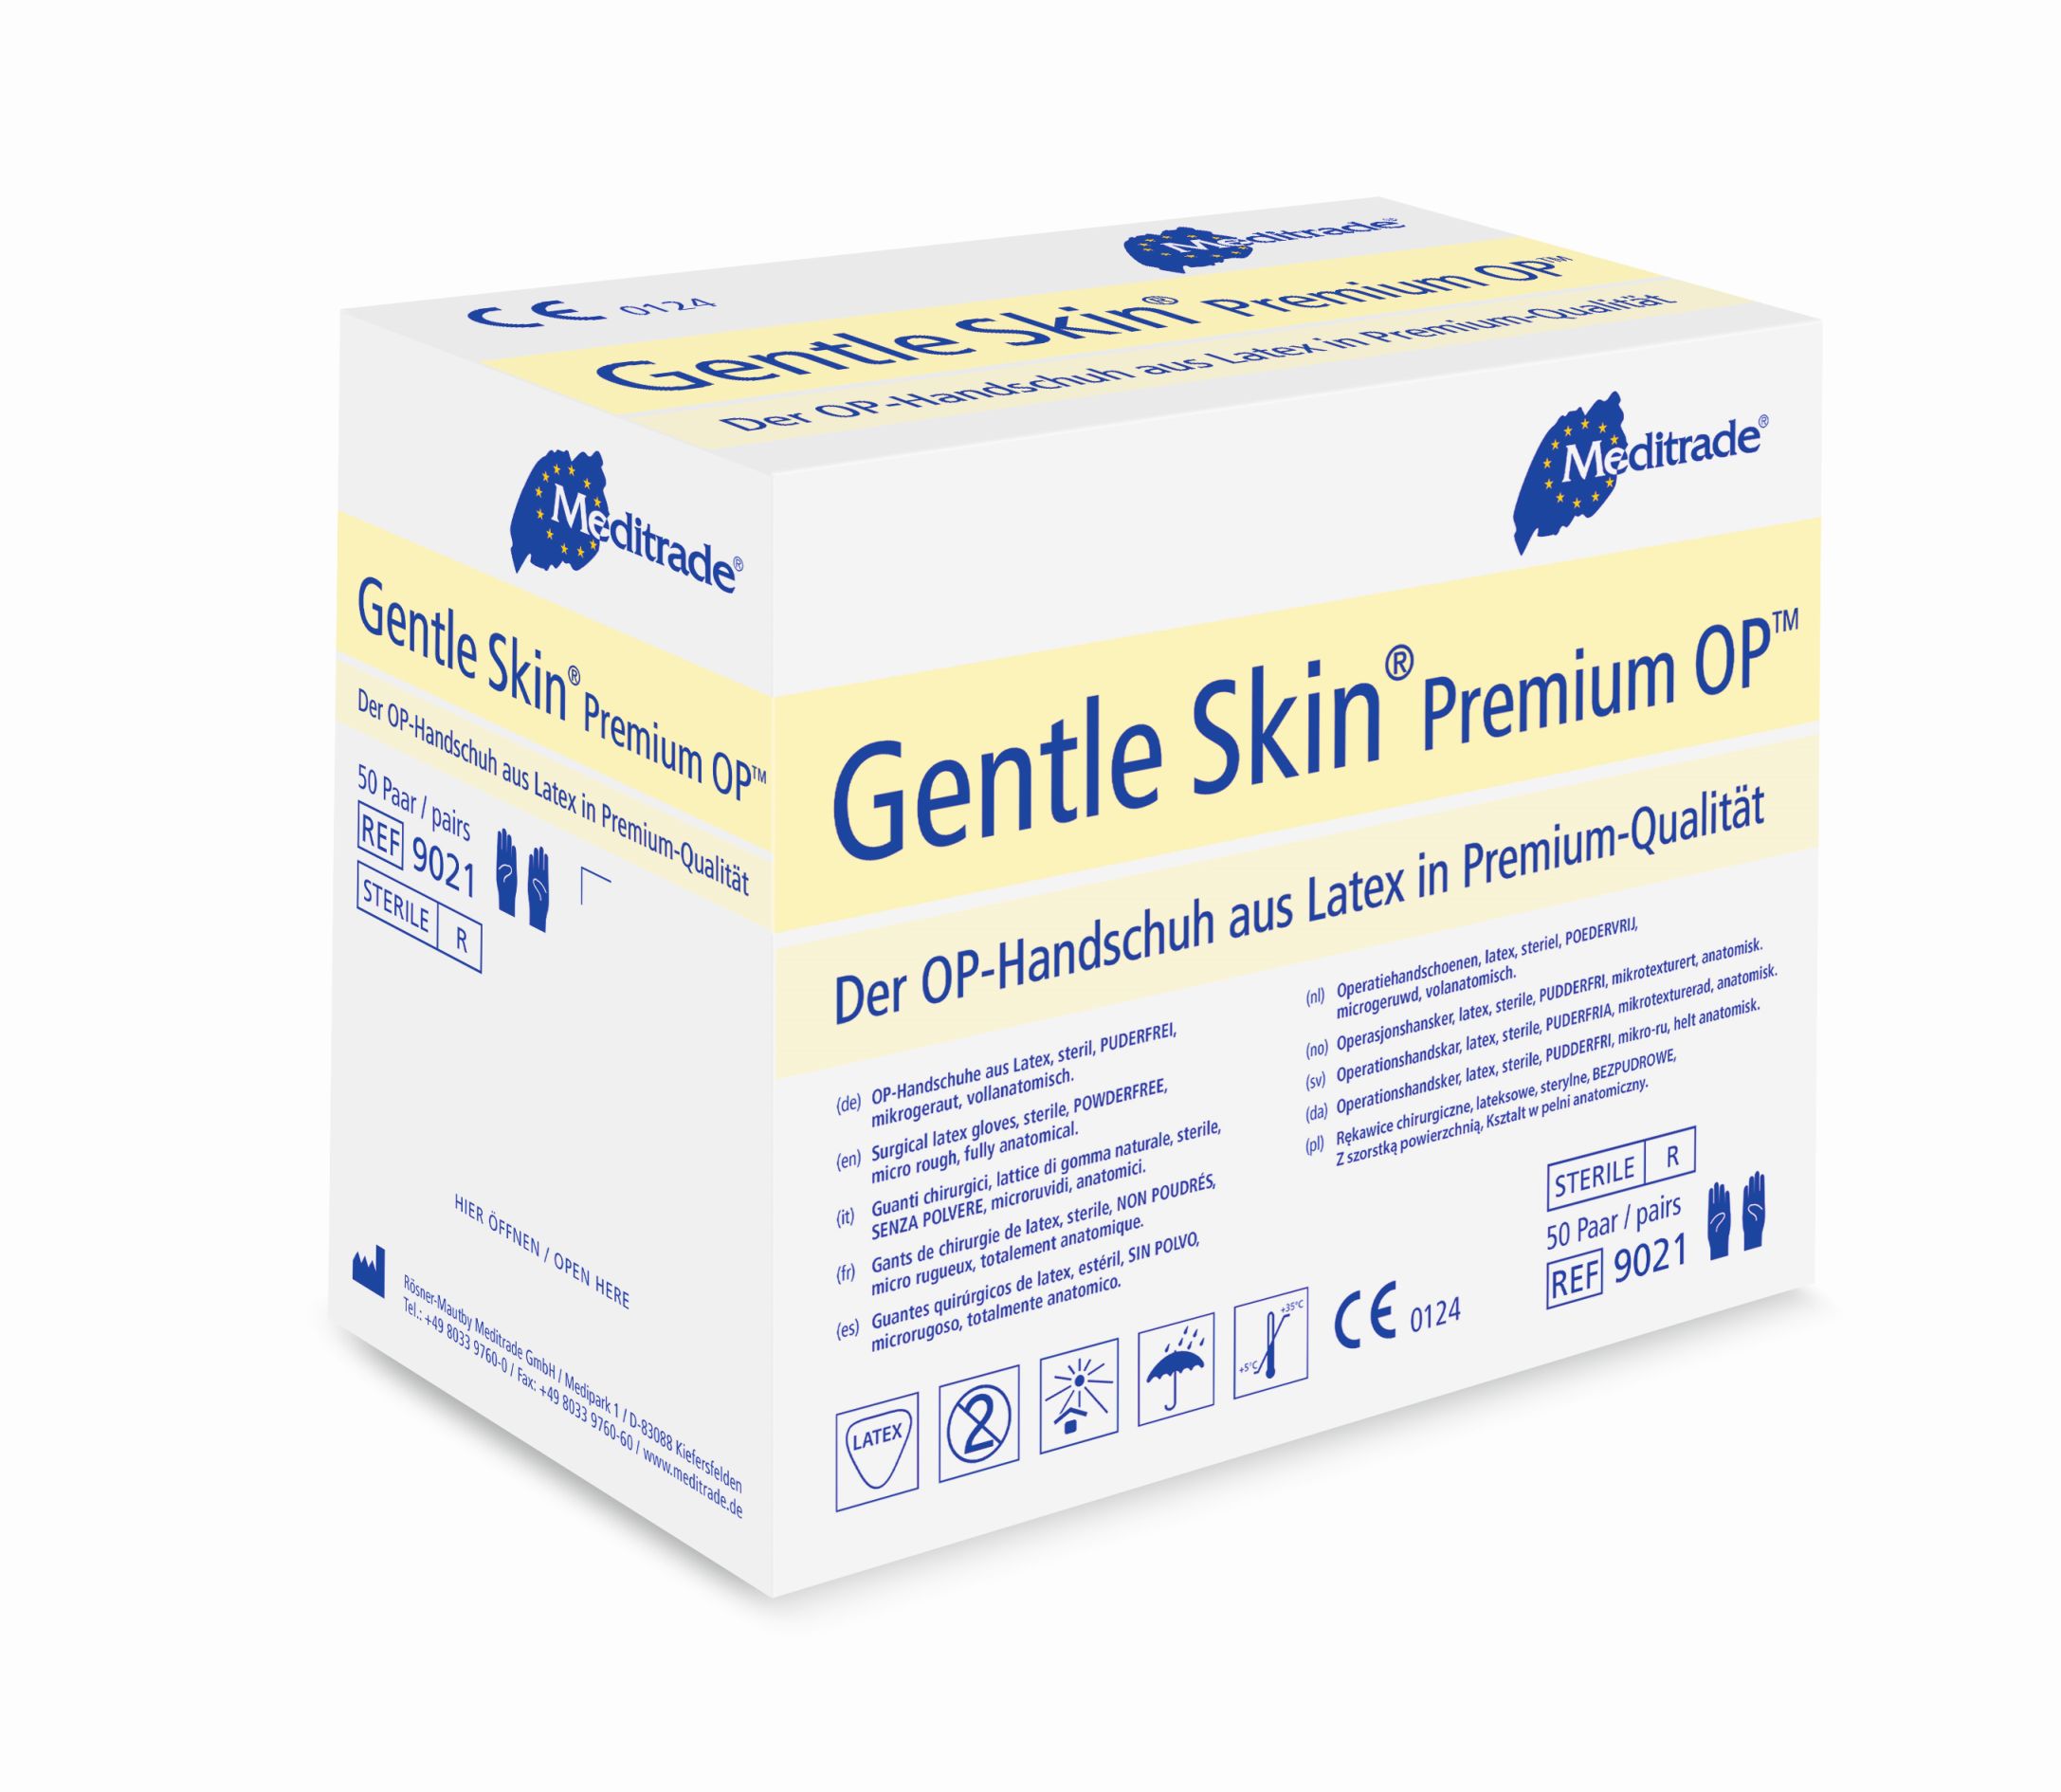 Gentle Skin Premium OP - sterile Handschuhe